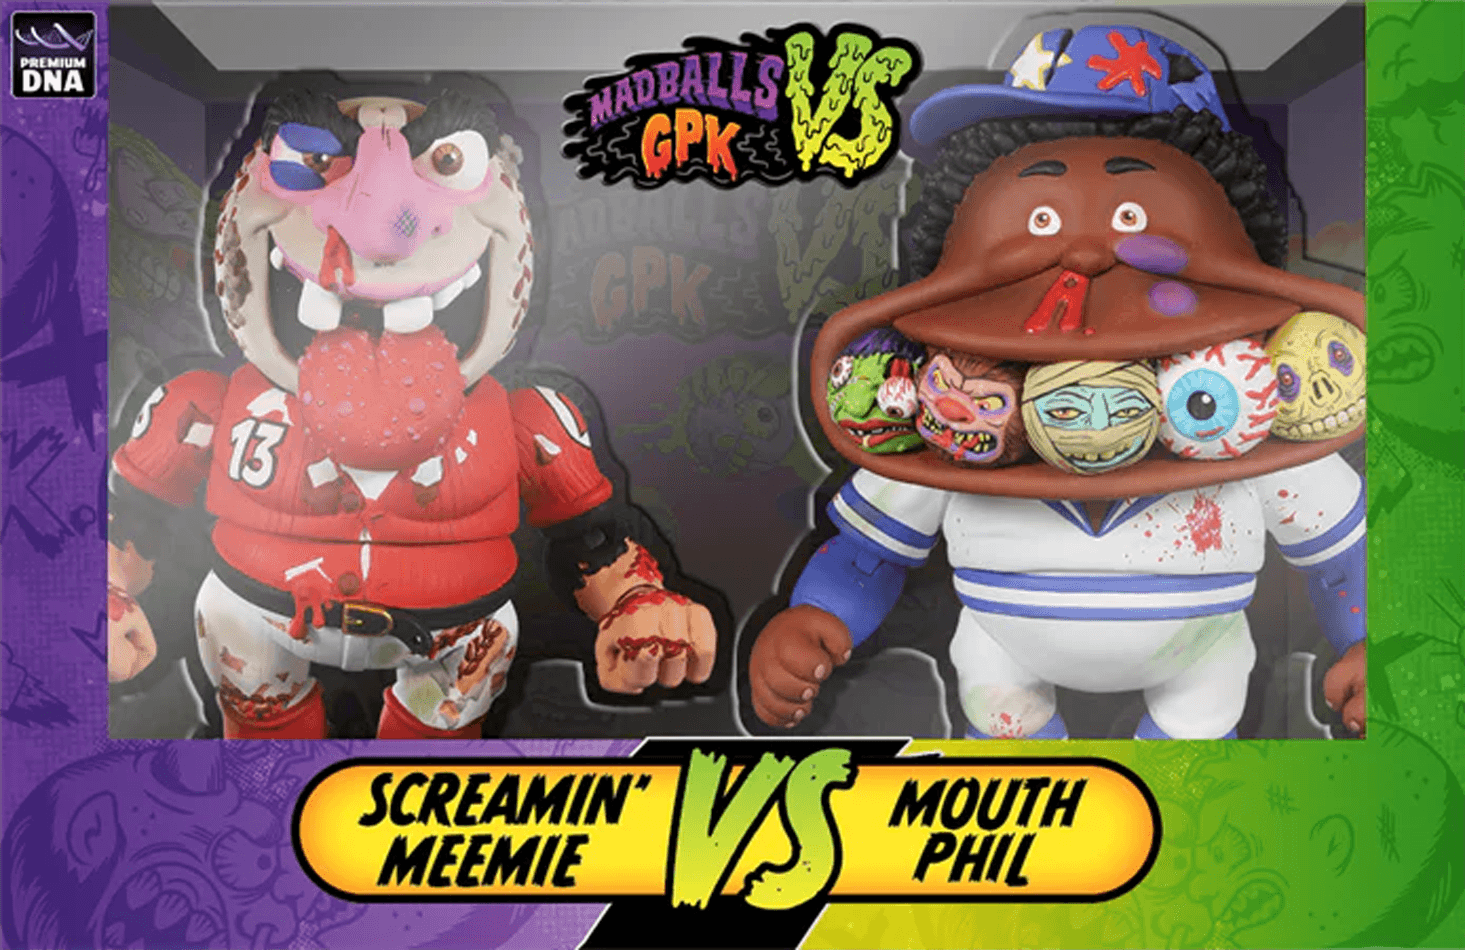 Madballs vs GPK - Mouth Phil vs Screamin' Meemie Action Figure Set